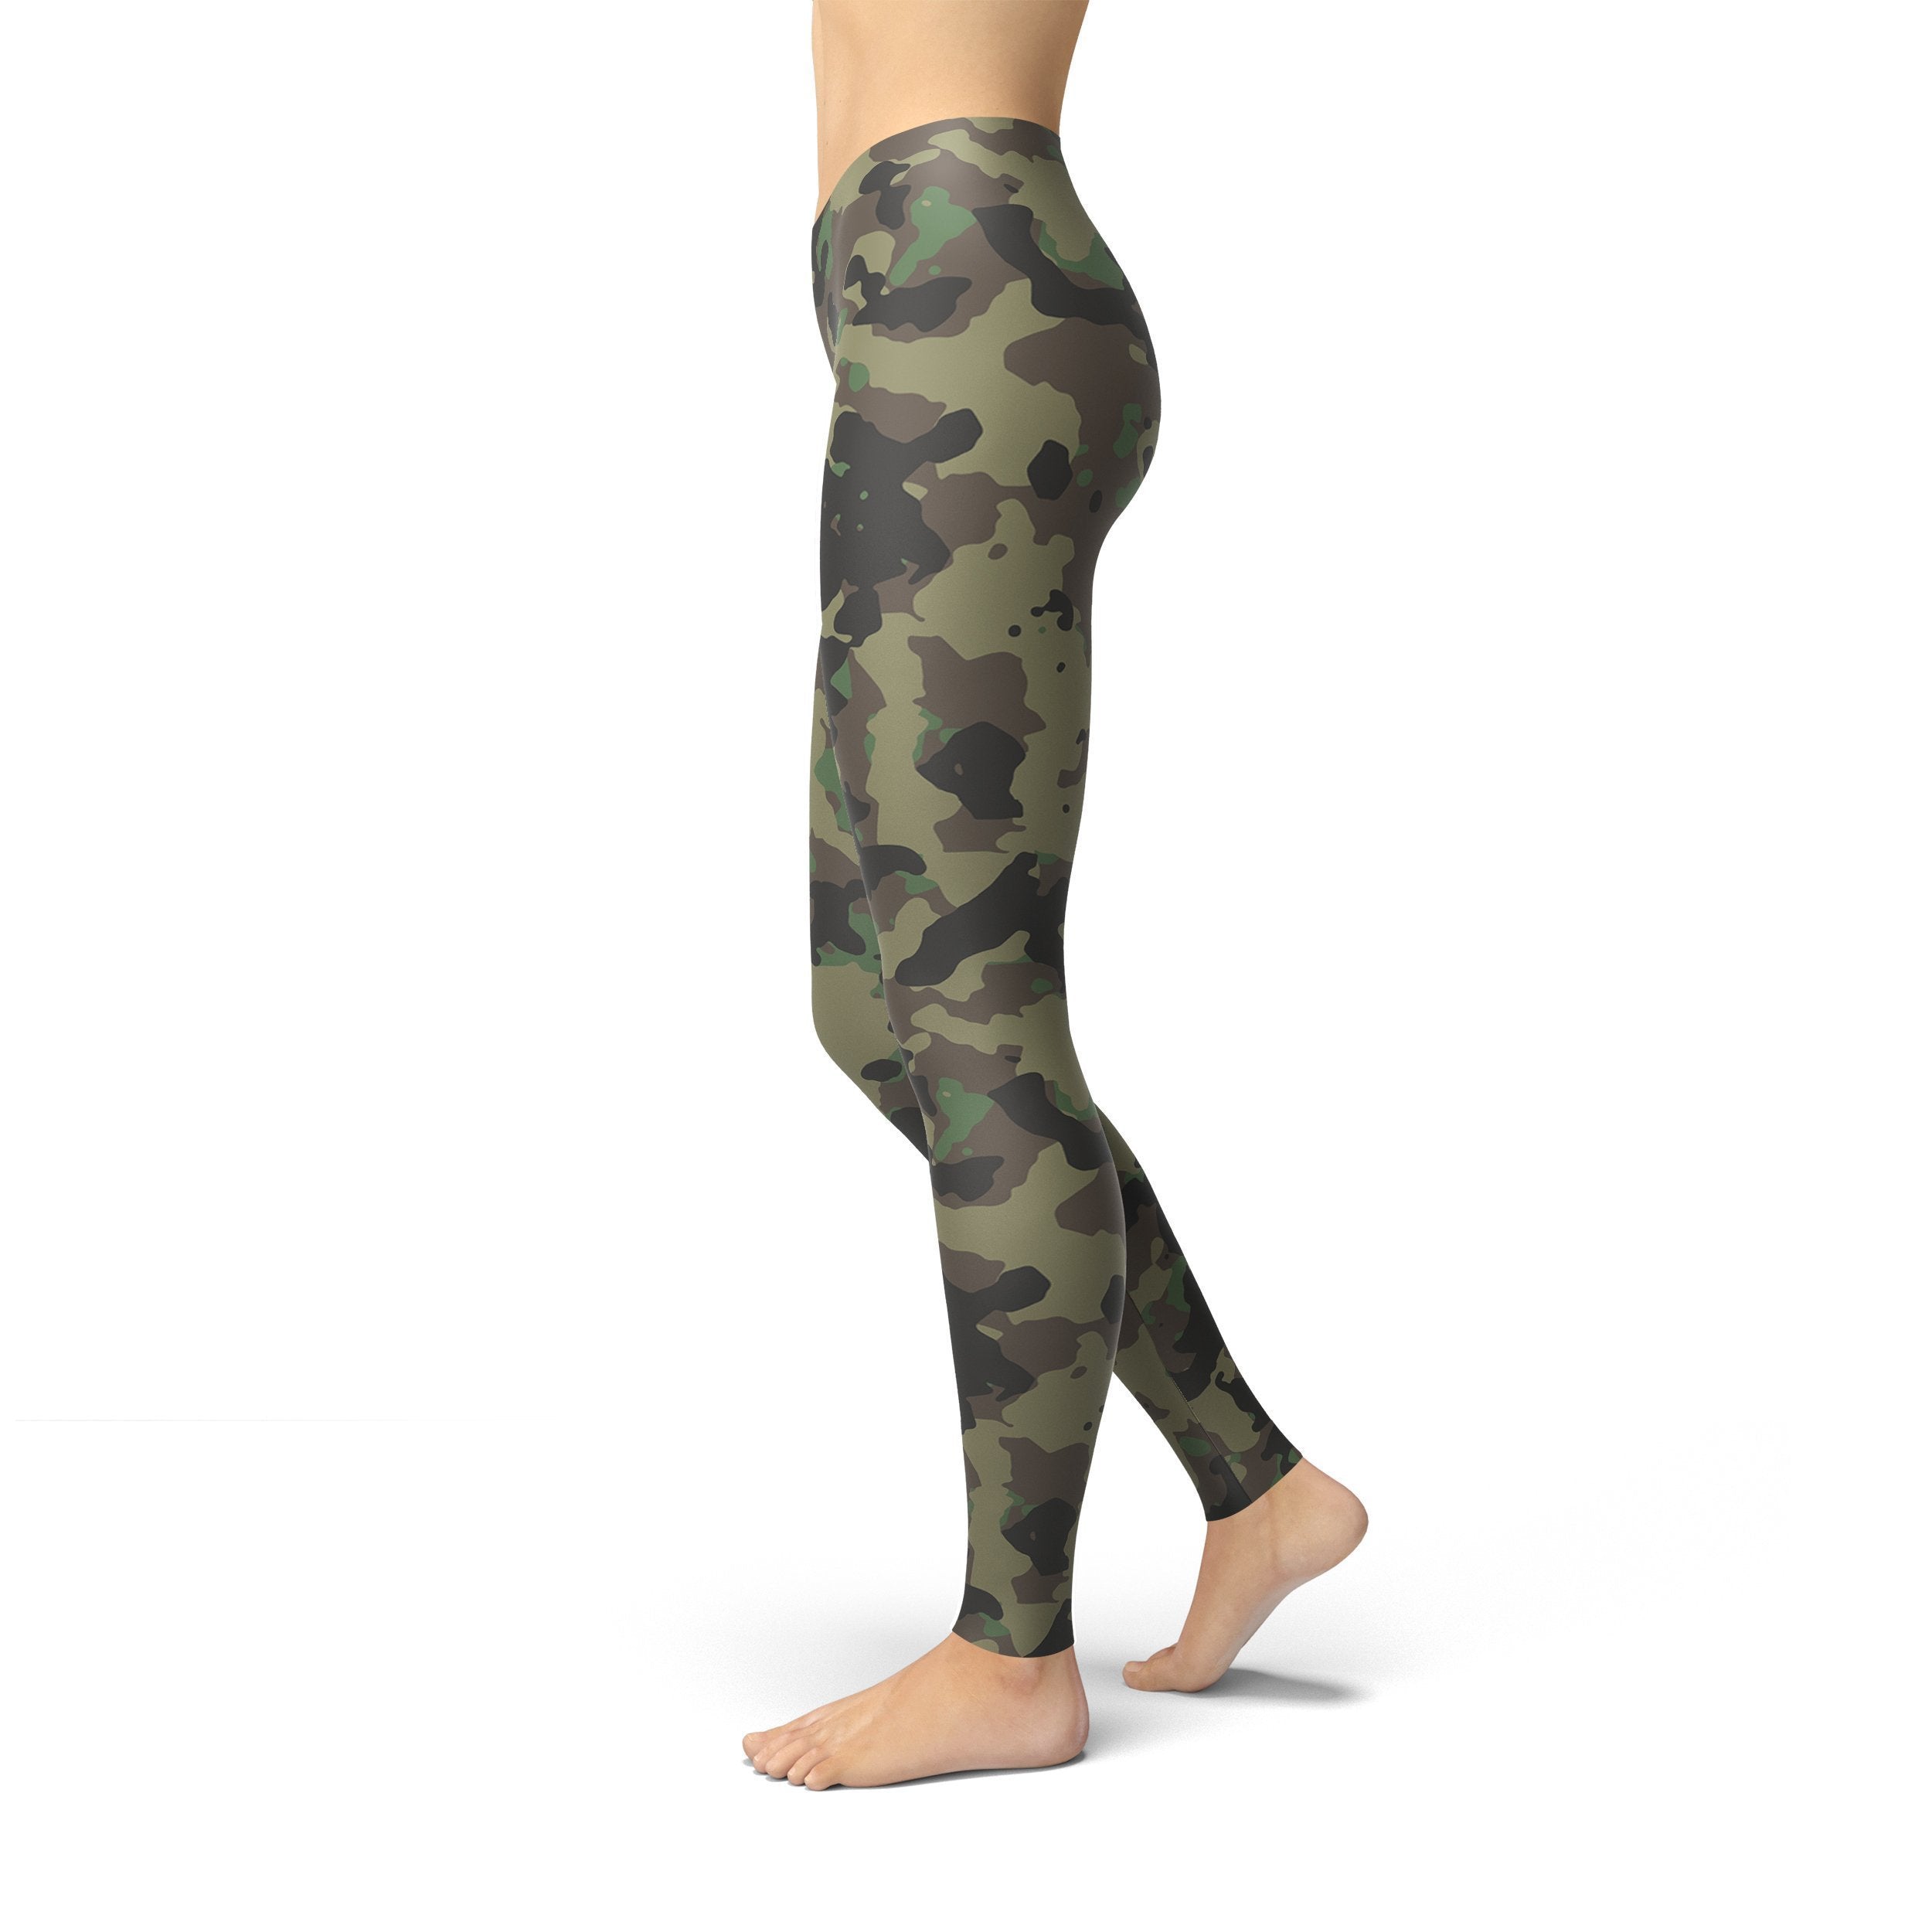 Jean camouflage leggings